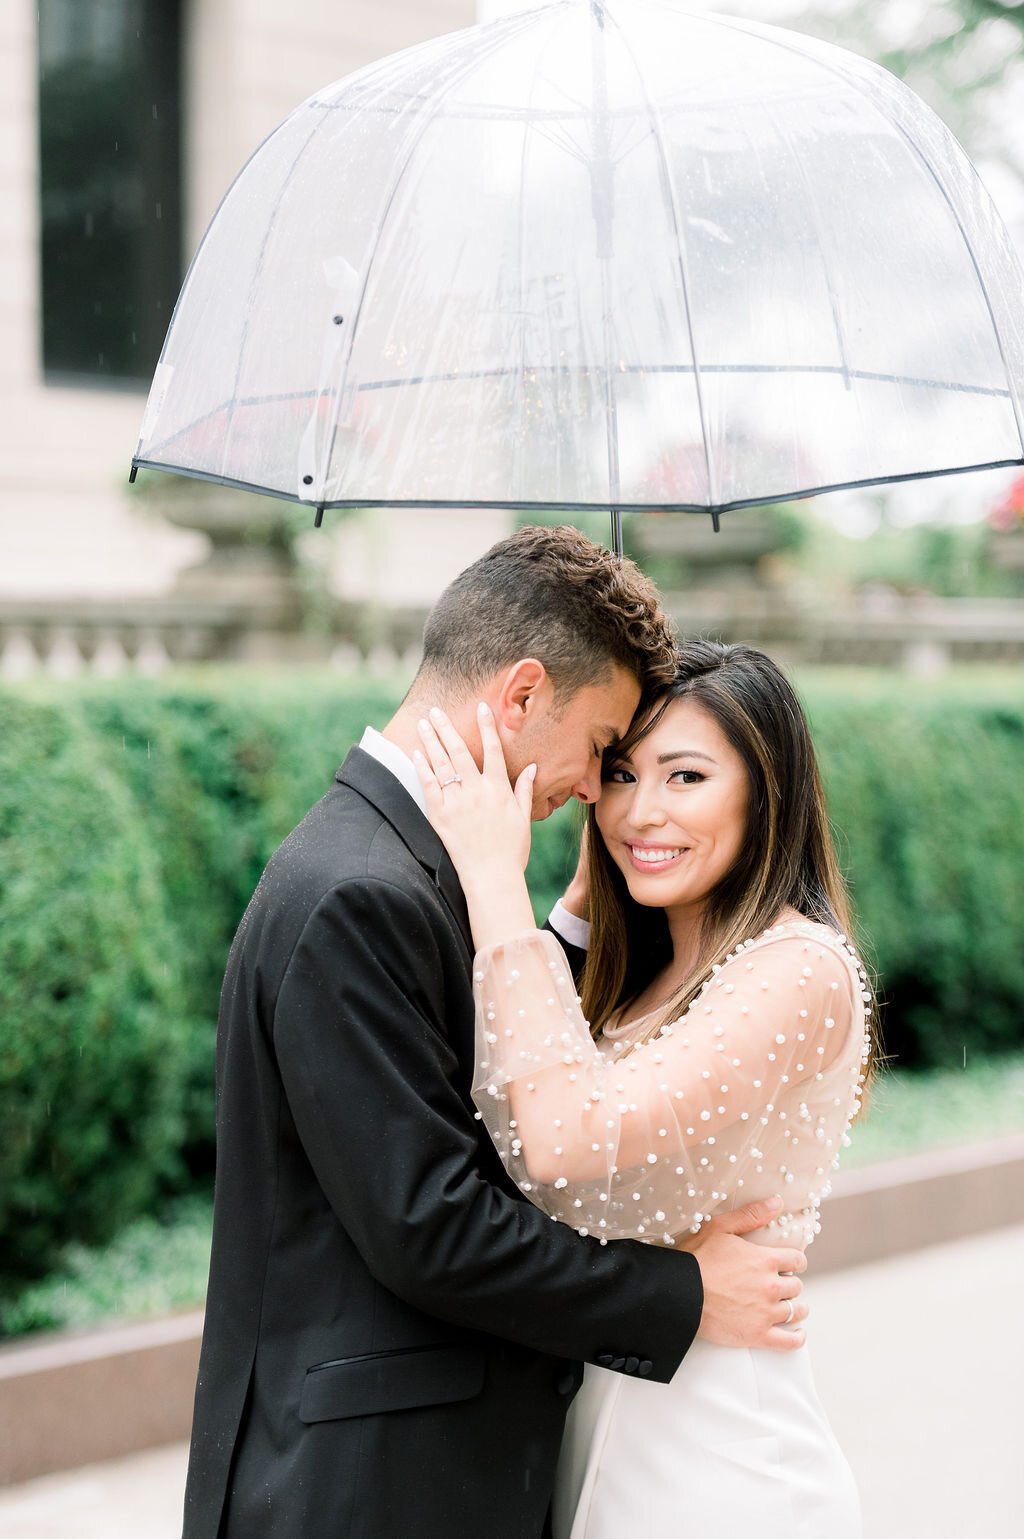 Rainy Day Engagement Session | Larissa Marie Photography